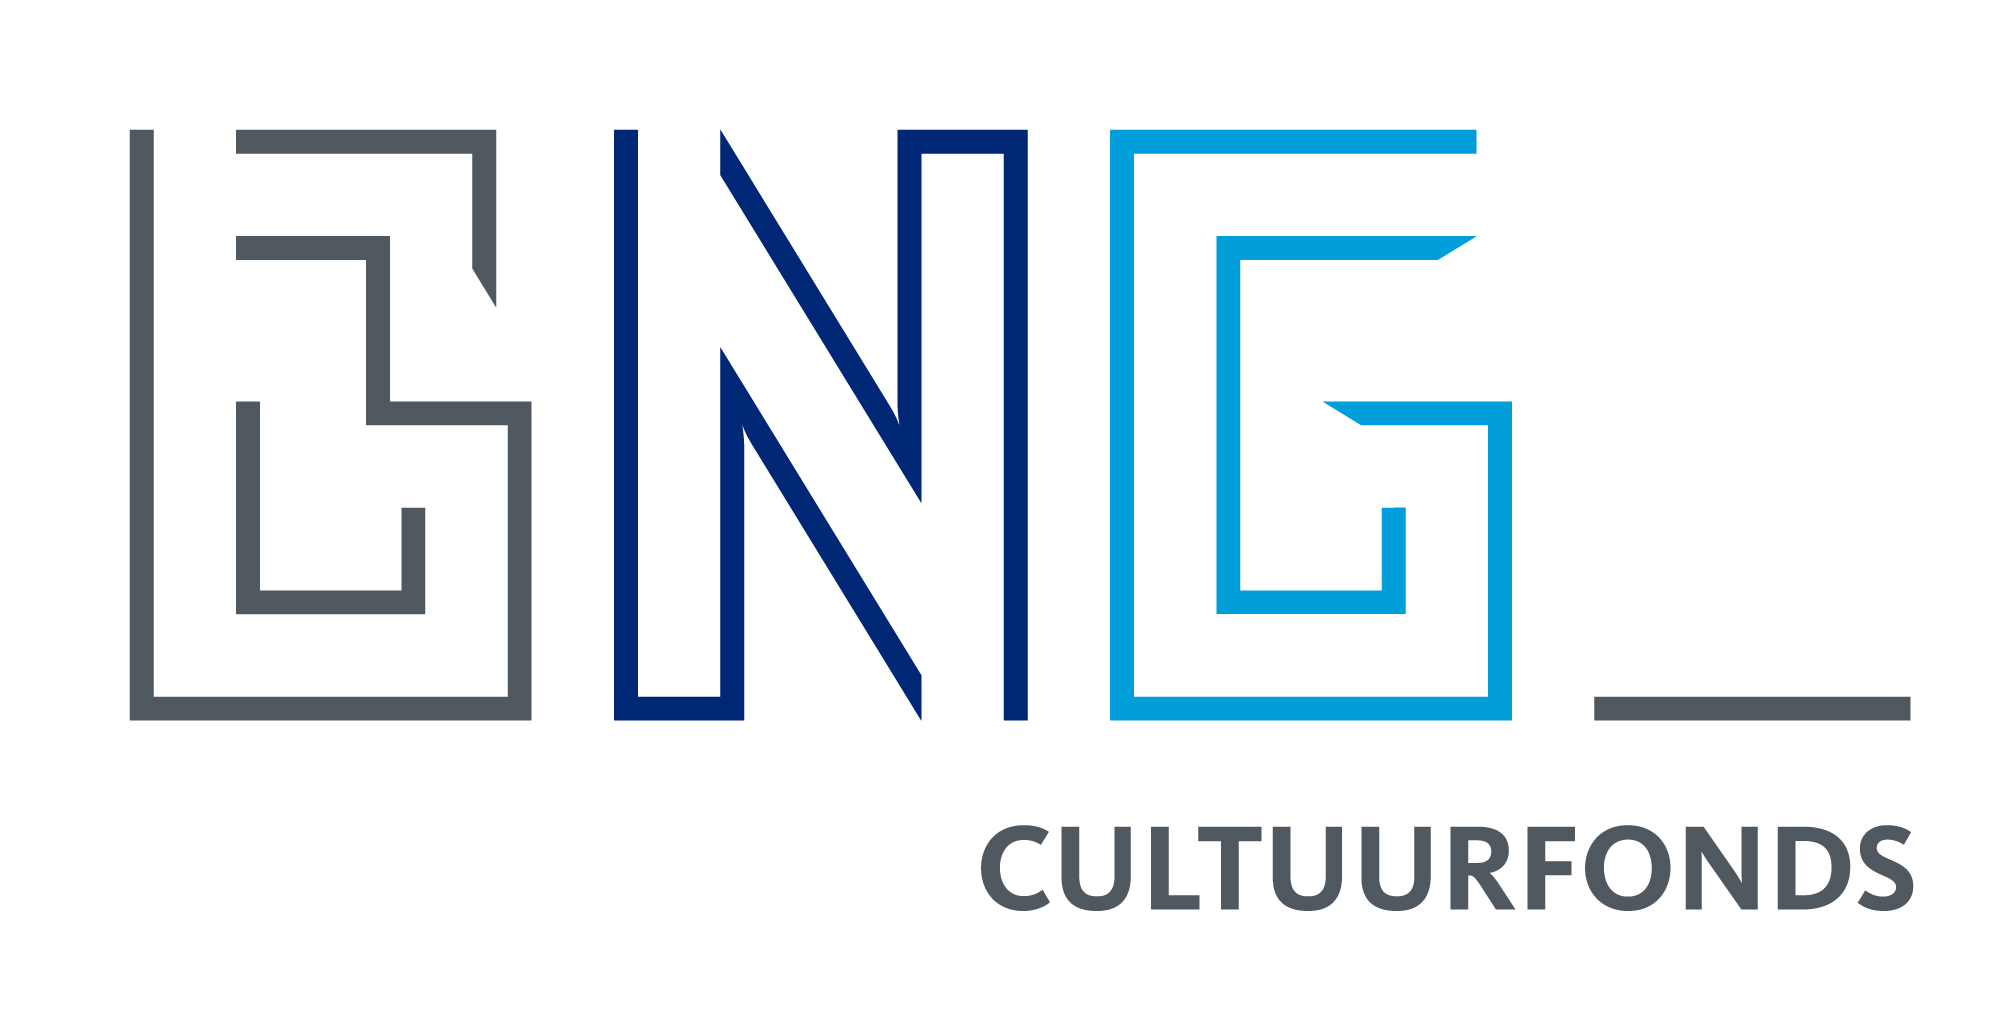 Logo BNG Cultuurfonds kleur